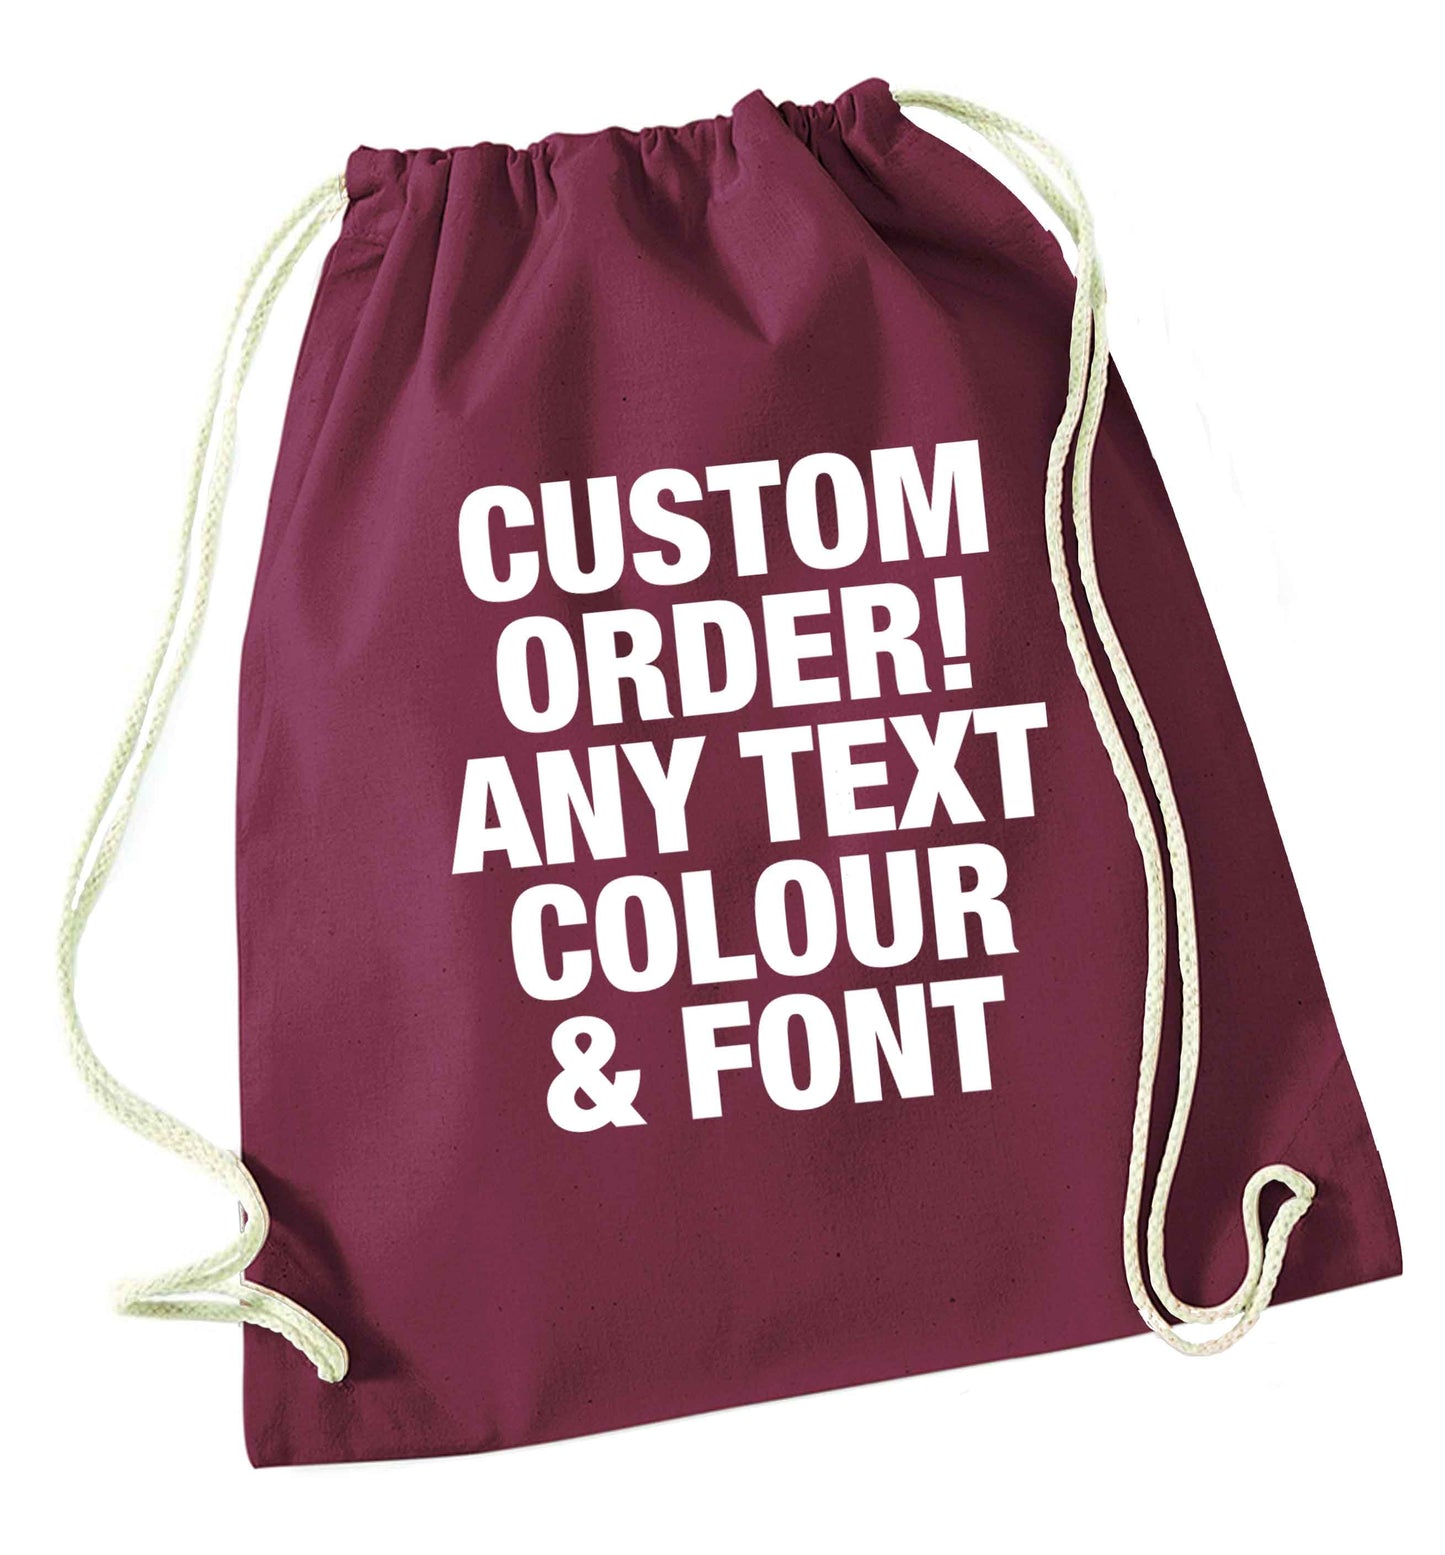 Custom order any text colour and font maroon drawstring bag